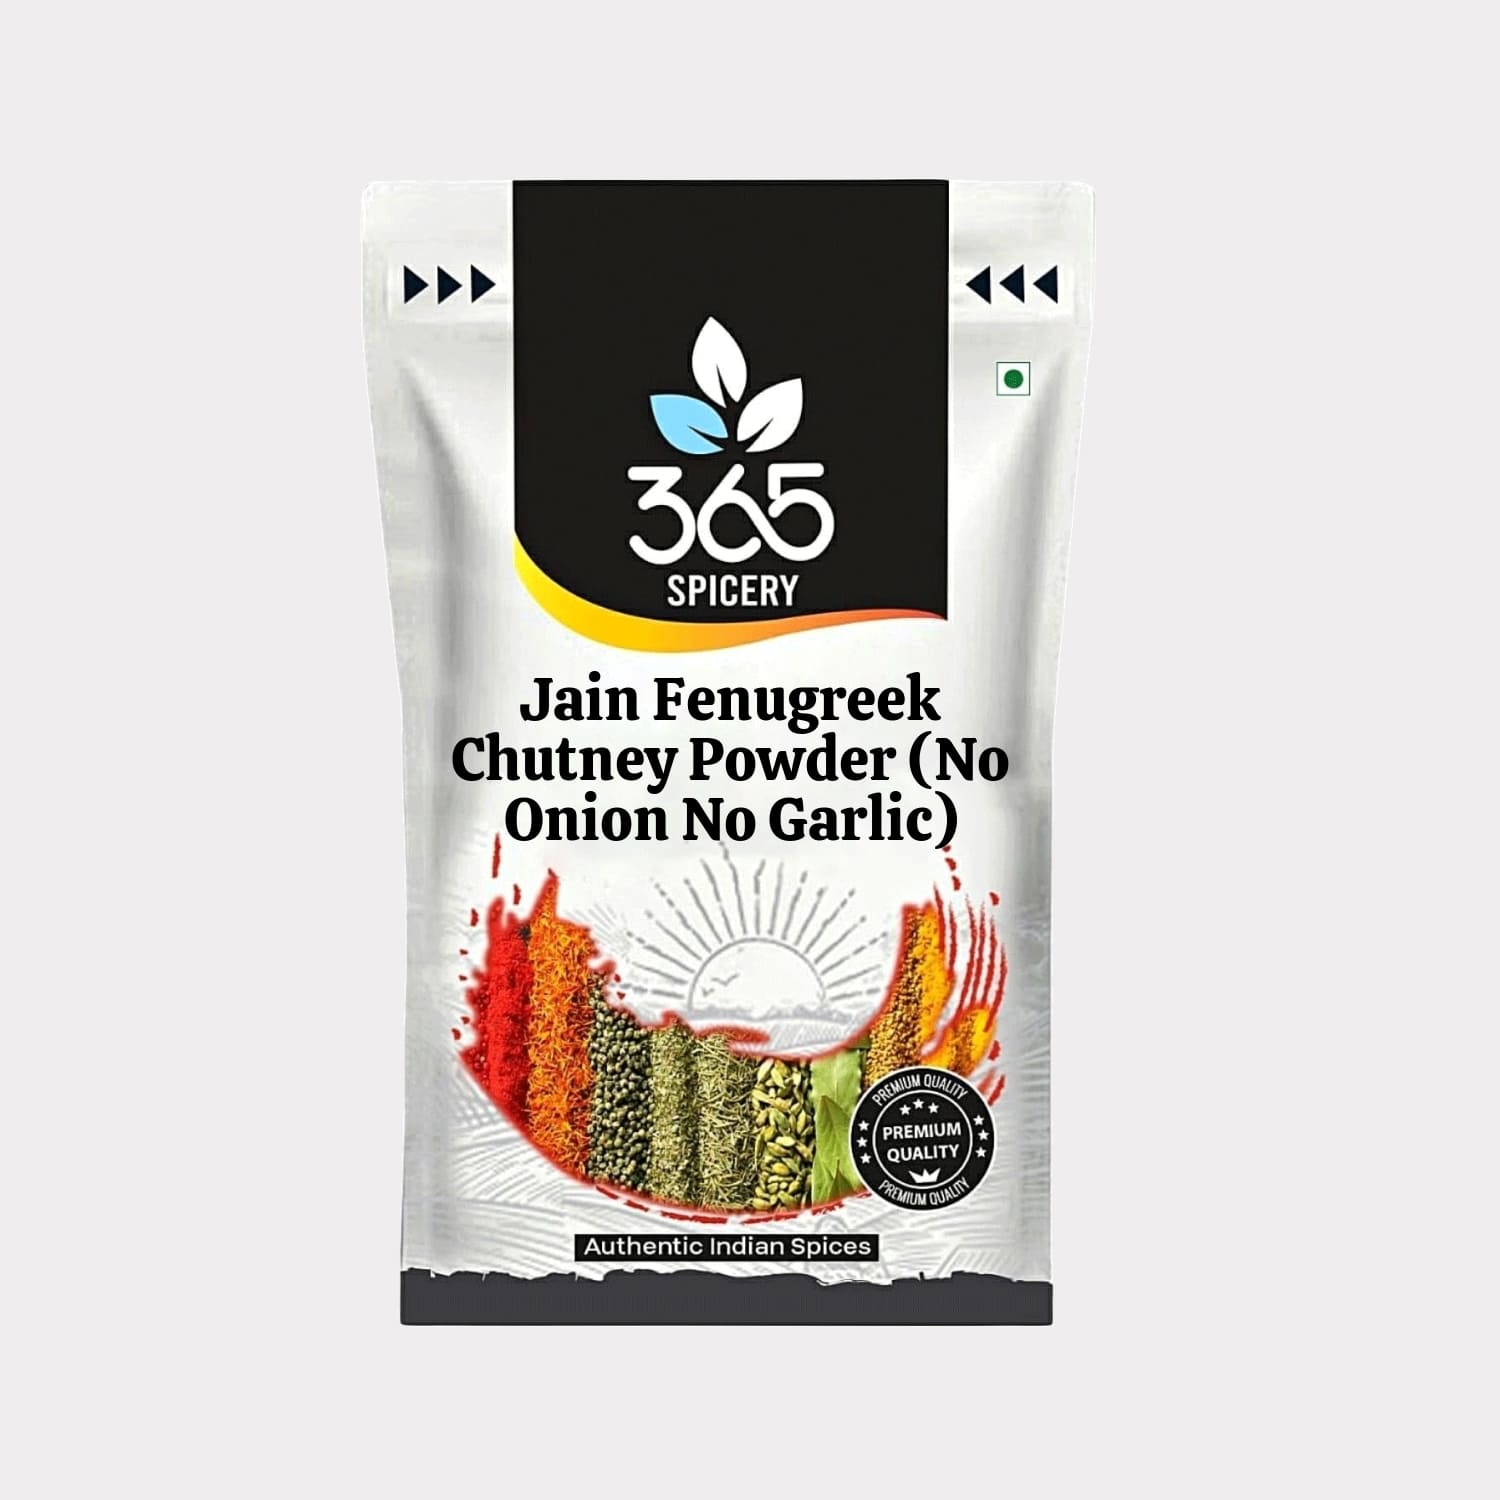 Jain Fenugreek Chutney Powder (No Onion No Garlic)